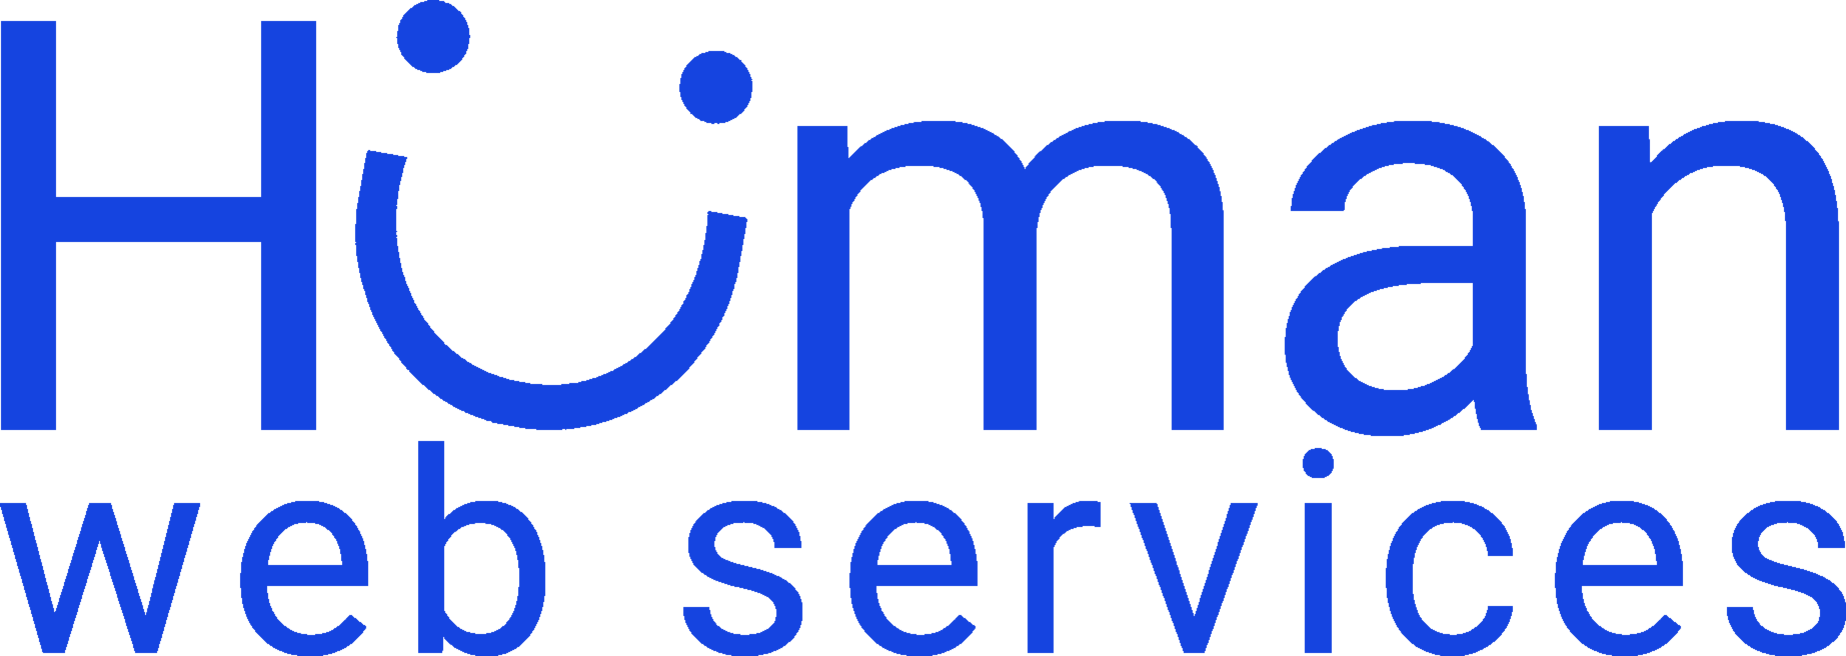 Human web services blue logo